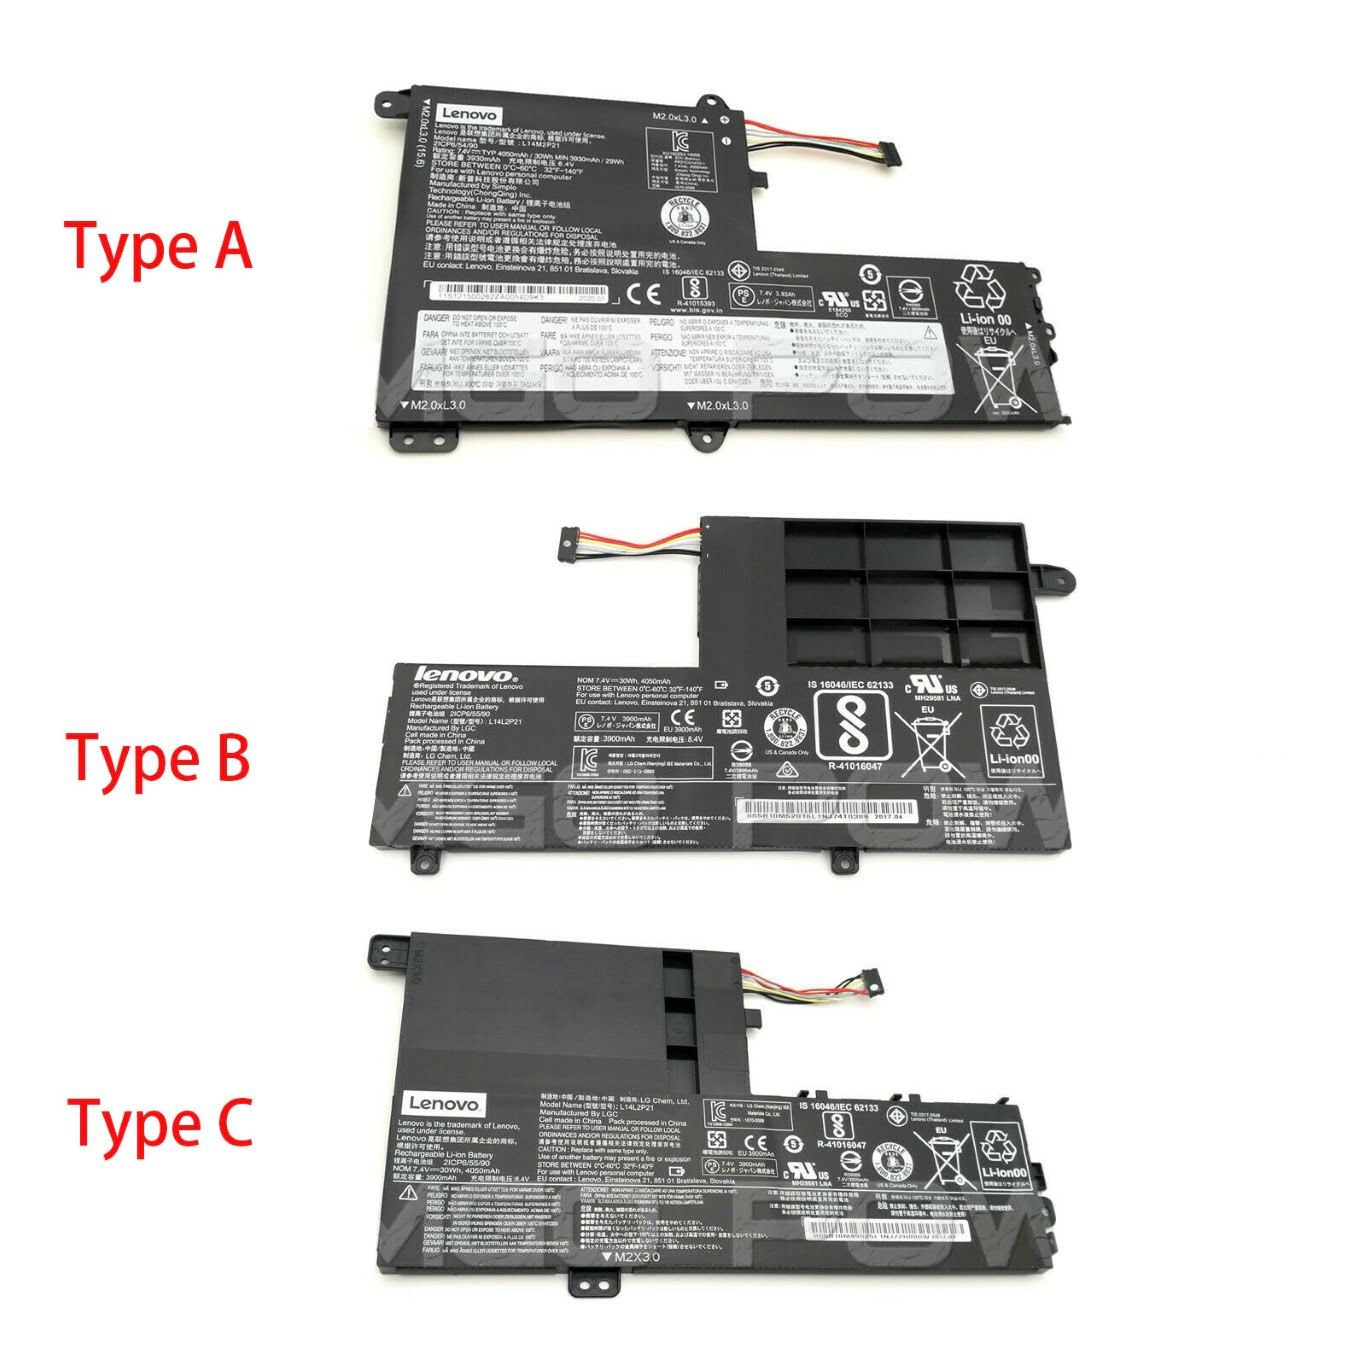 5B10G78610, 5B10G78612 ersatz Laptop Akku fuer Lenovo IdeaPad 300s-14ISK, IdeaPad 300s-14ISK 80Q4, 4050mah / 30wh, 7,4V